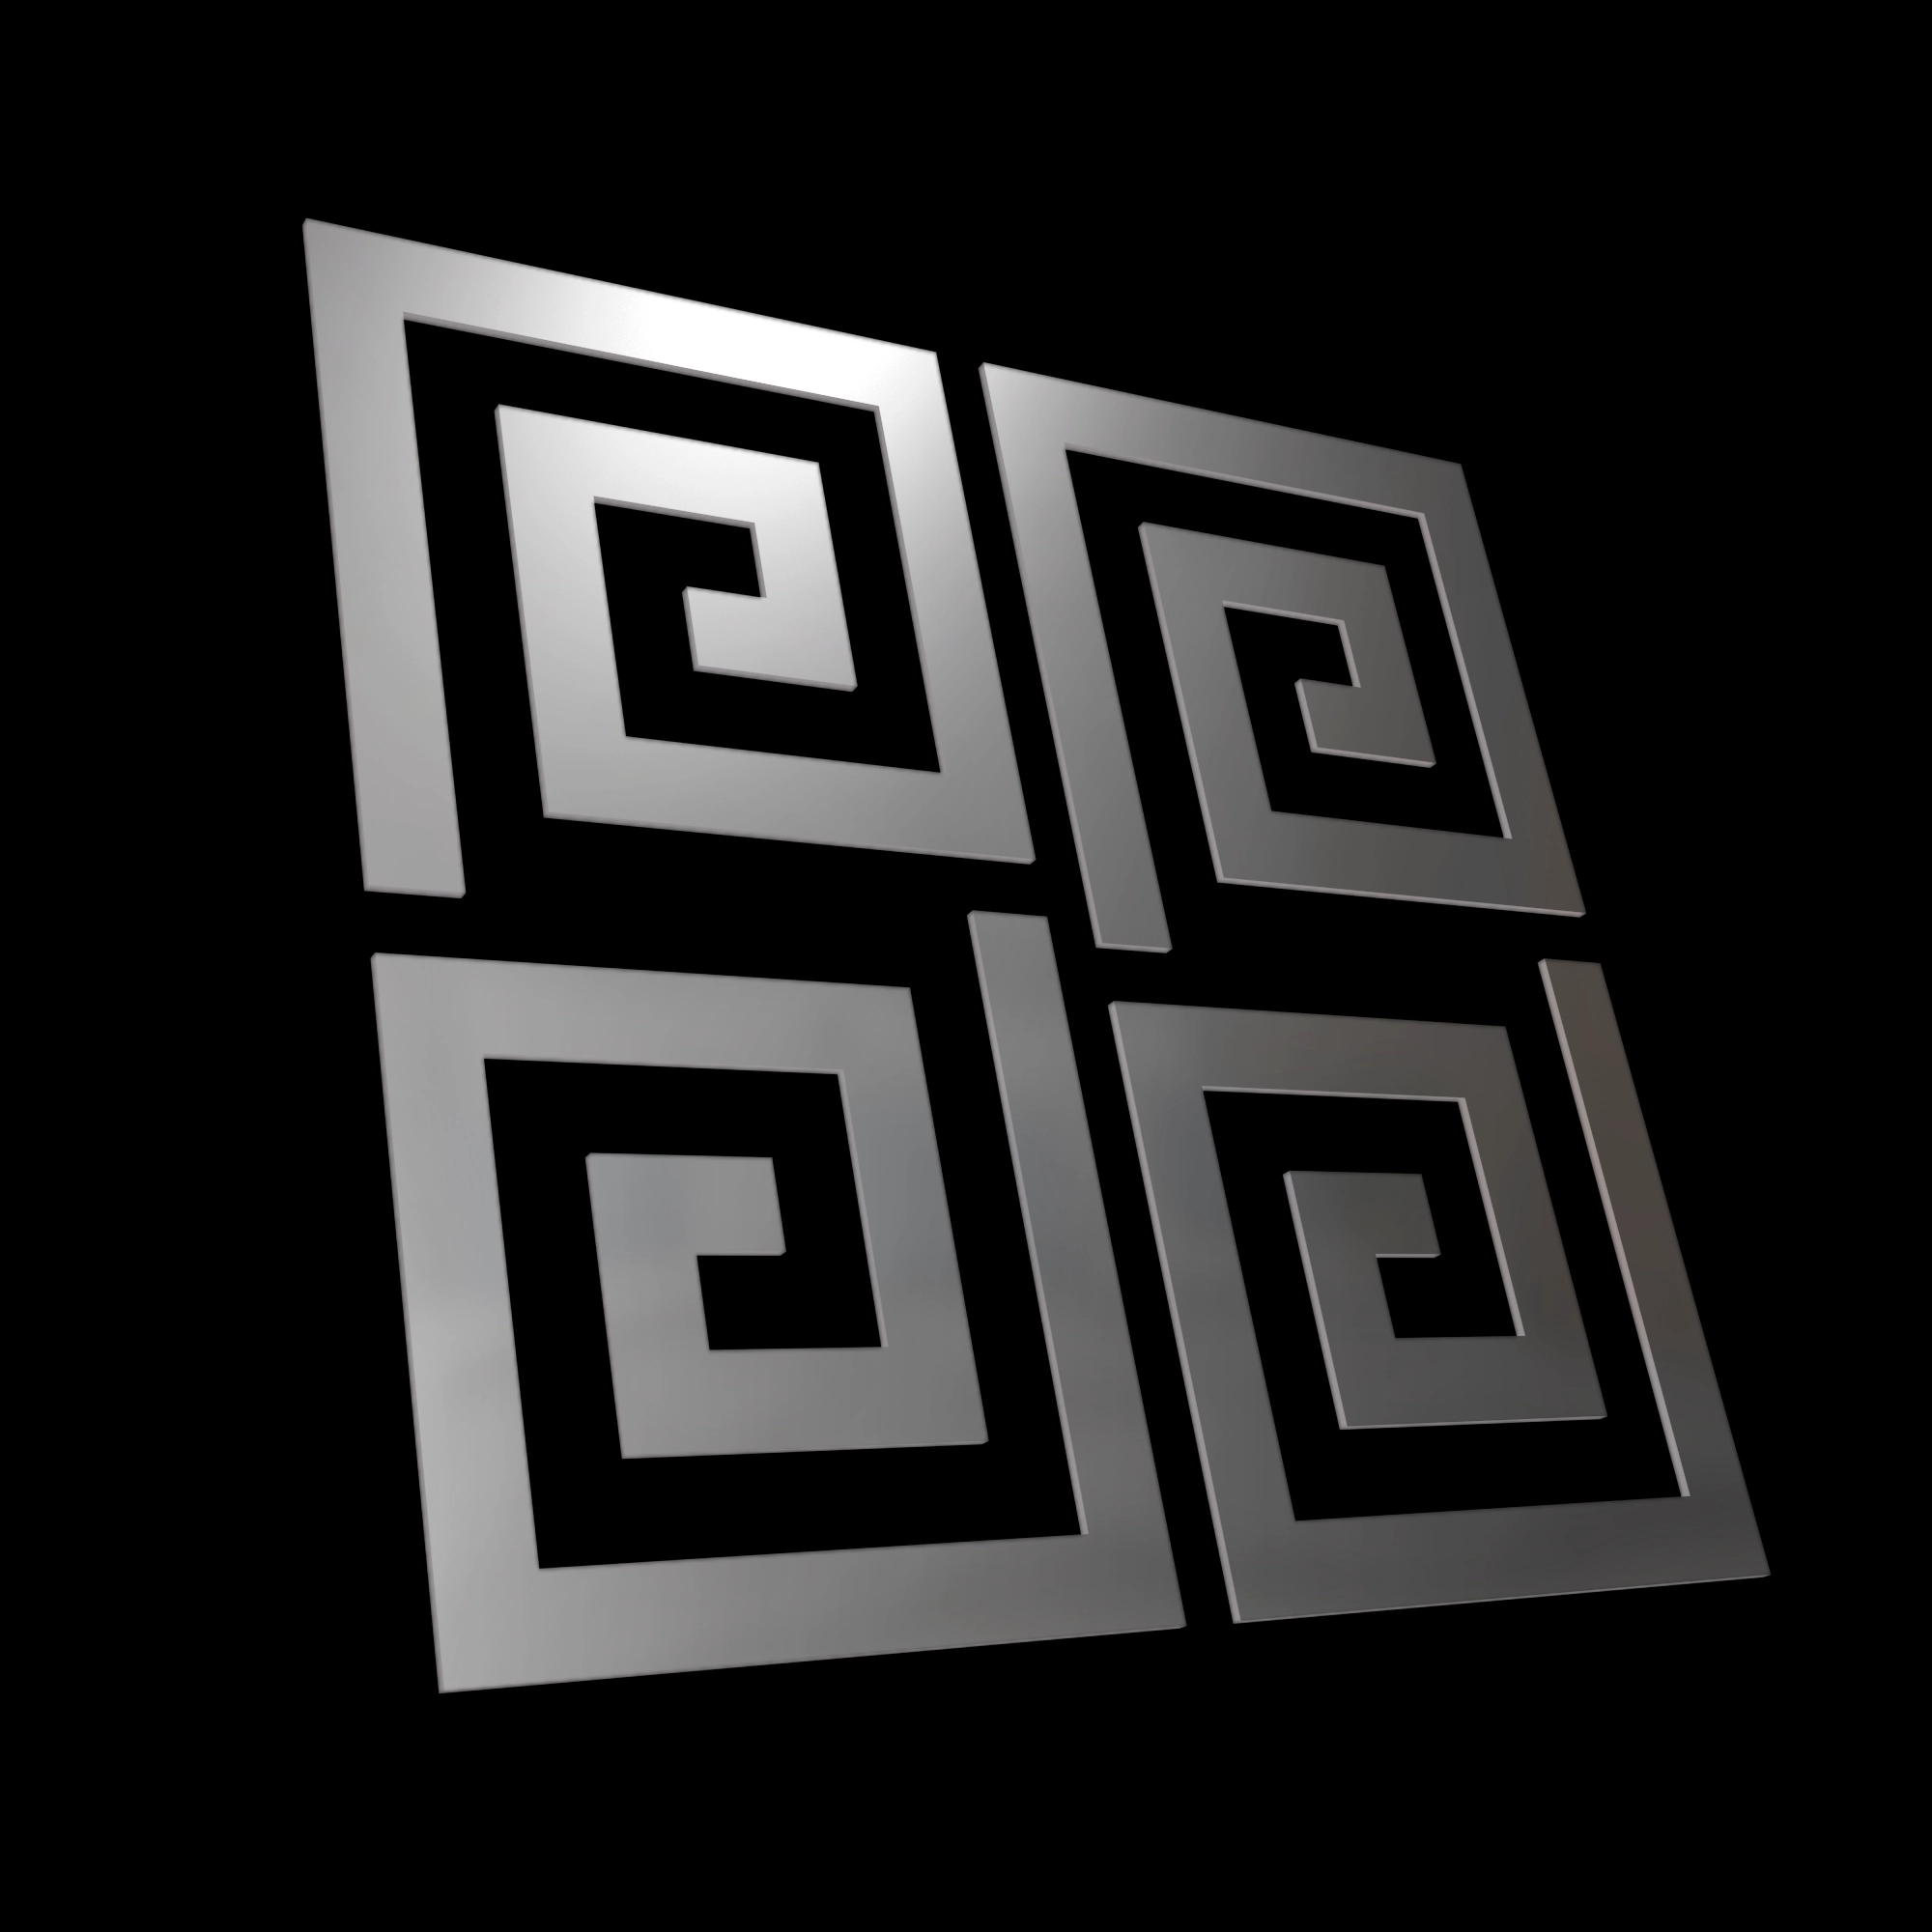 labyrinth_group_silver_800_800.webp